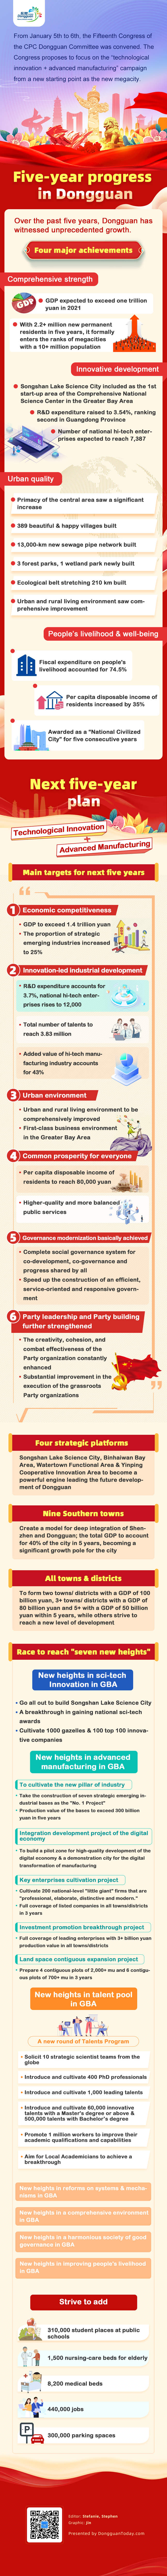 Dongguan's five-year progress & next five-year plan.png